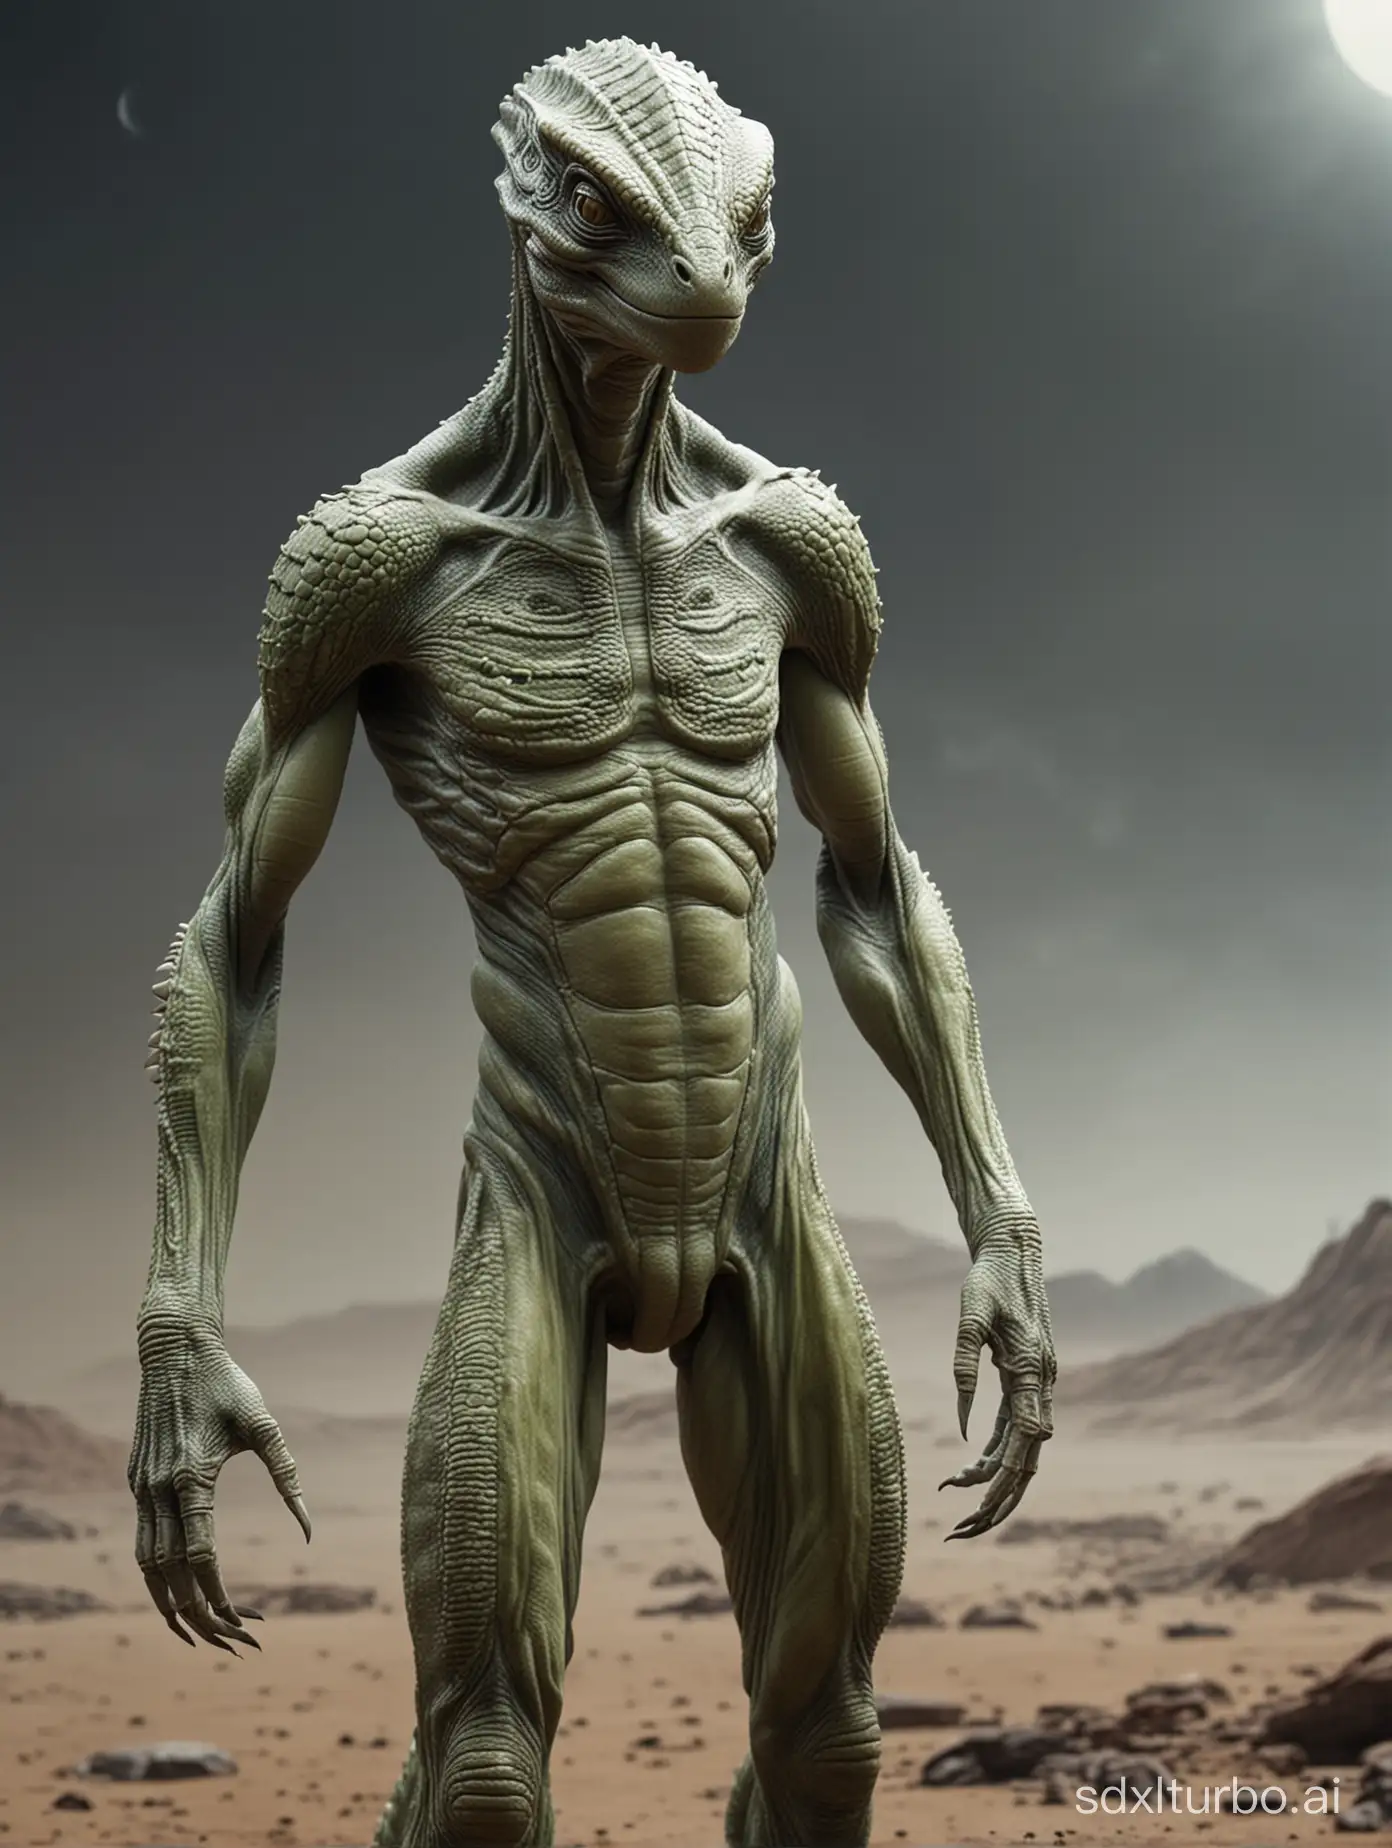 A reptilian alien standing